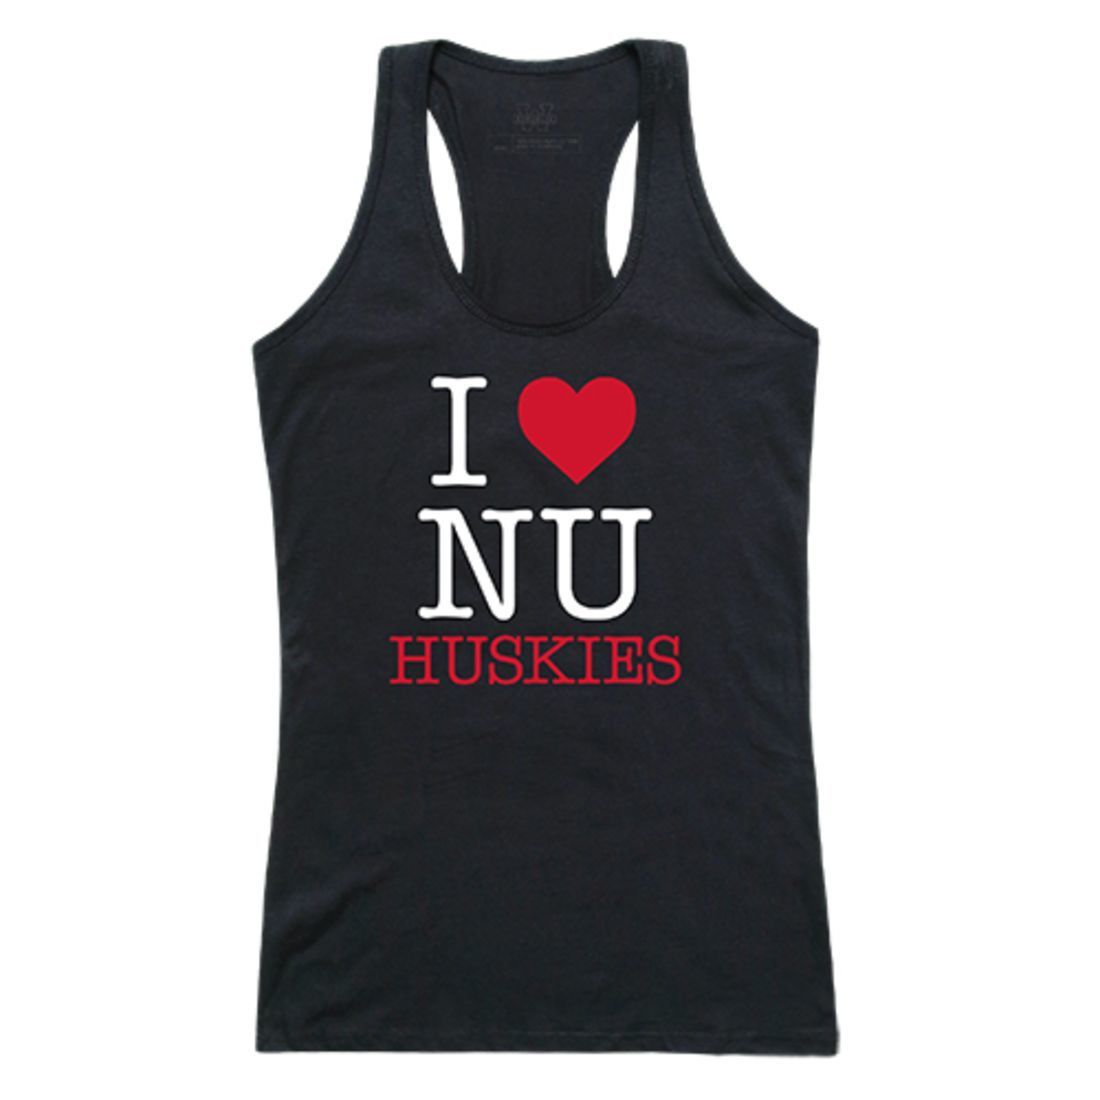 Northeastern University Huskies Womens Love Tank Top Tee T-Shirt Black-Campus-Wardrobe